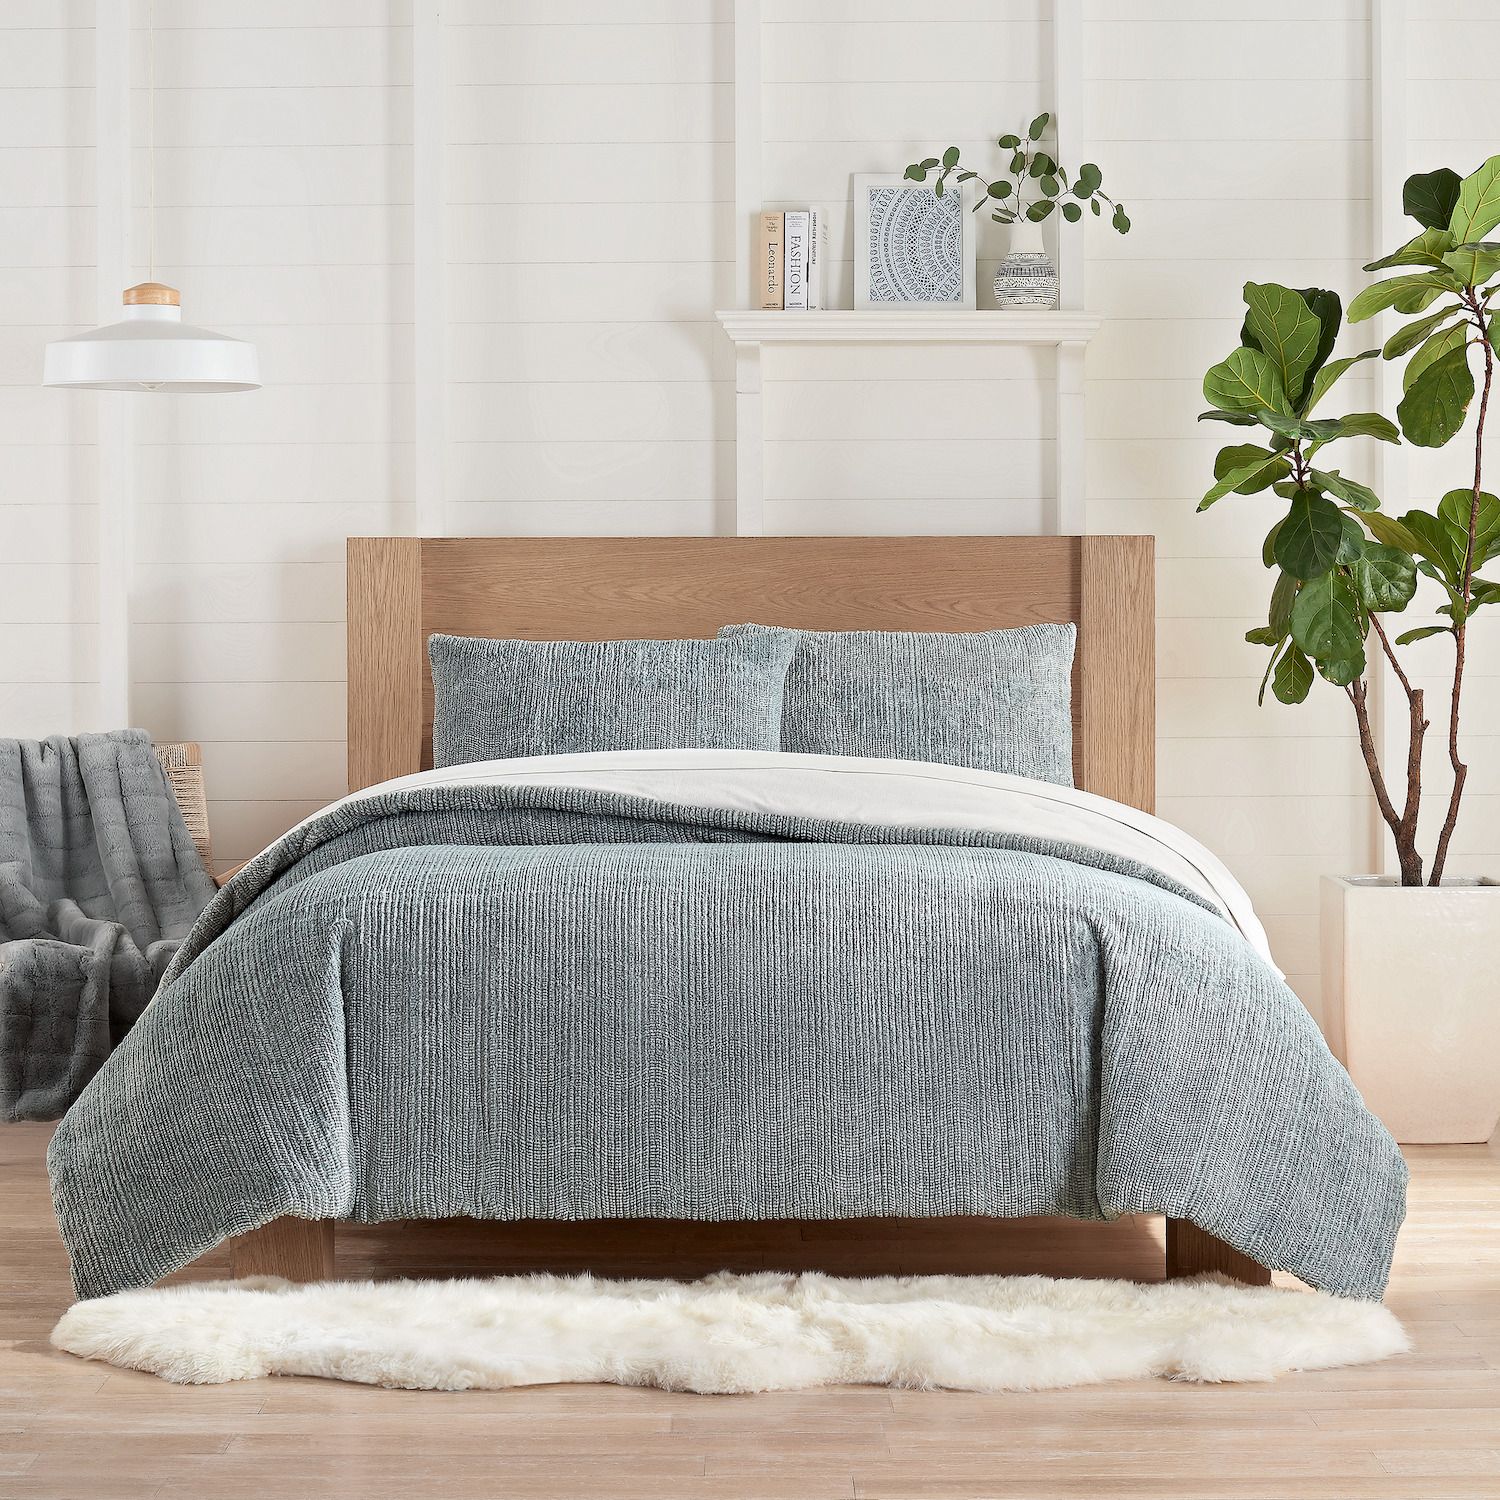 koolaburra by ugg sulana comforter set